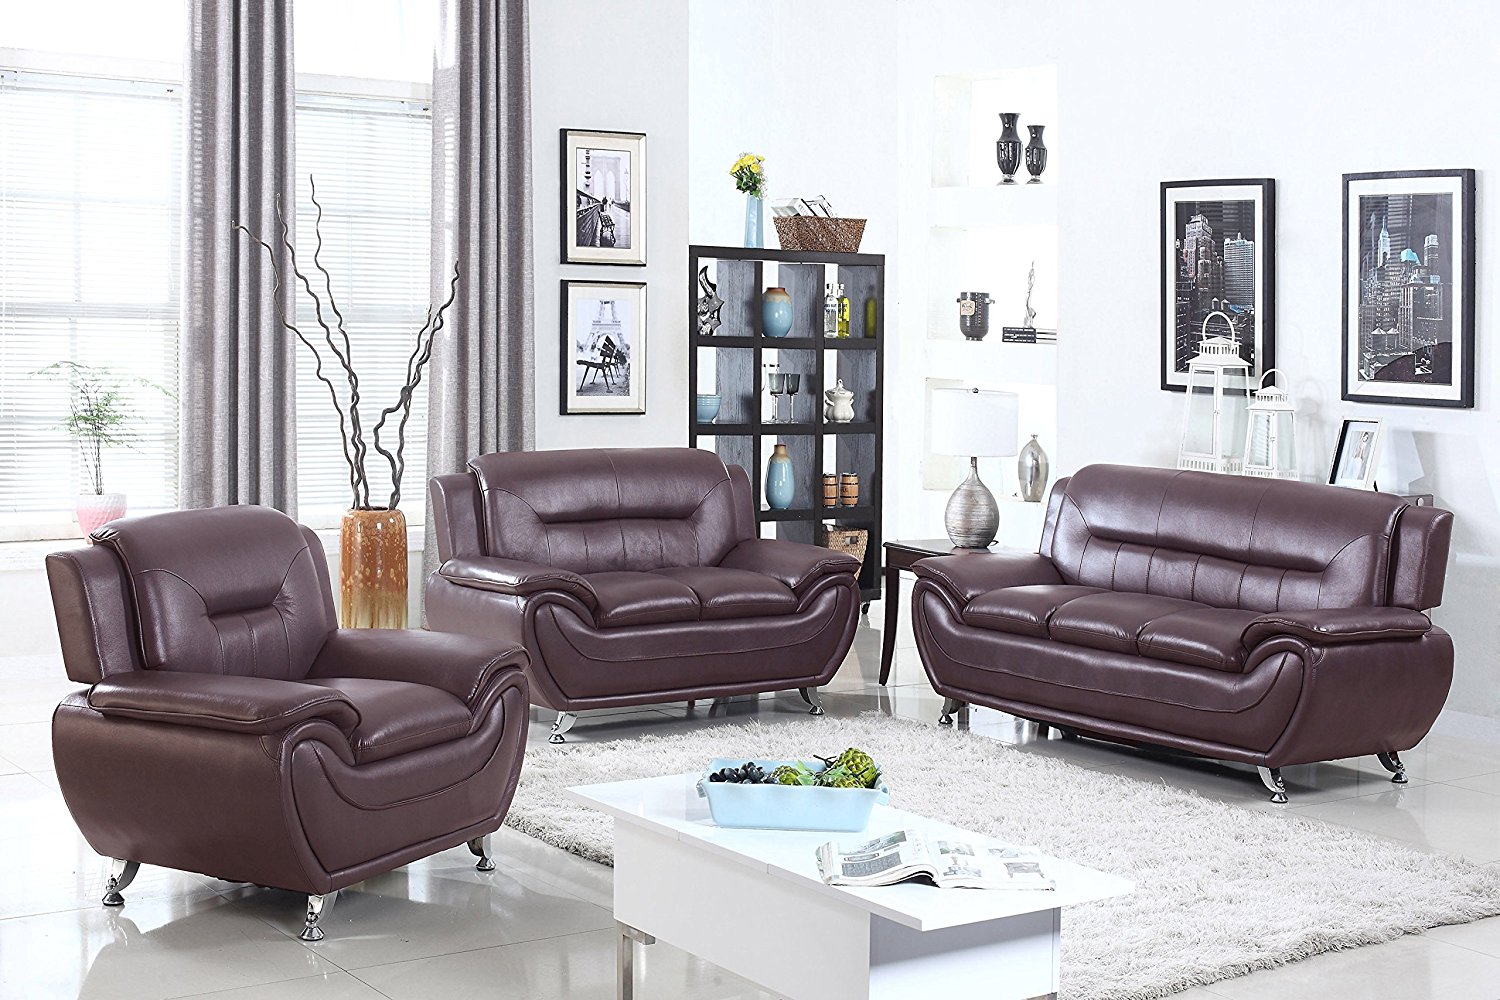 U.S. Livings Anya Modern Living Room Polyurethane Leather Sofa, Loveseat, and Chair Set (3-Piece, Dark Cherry)